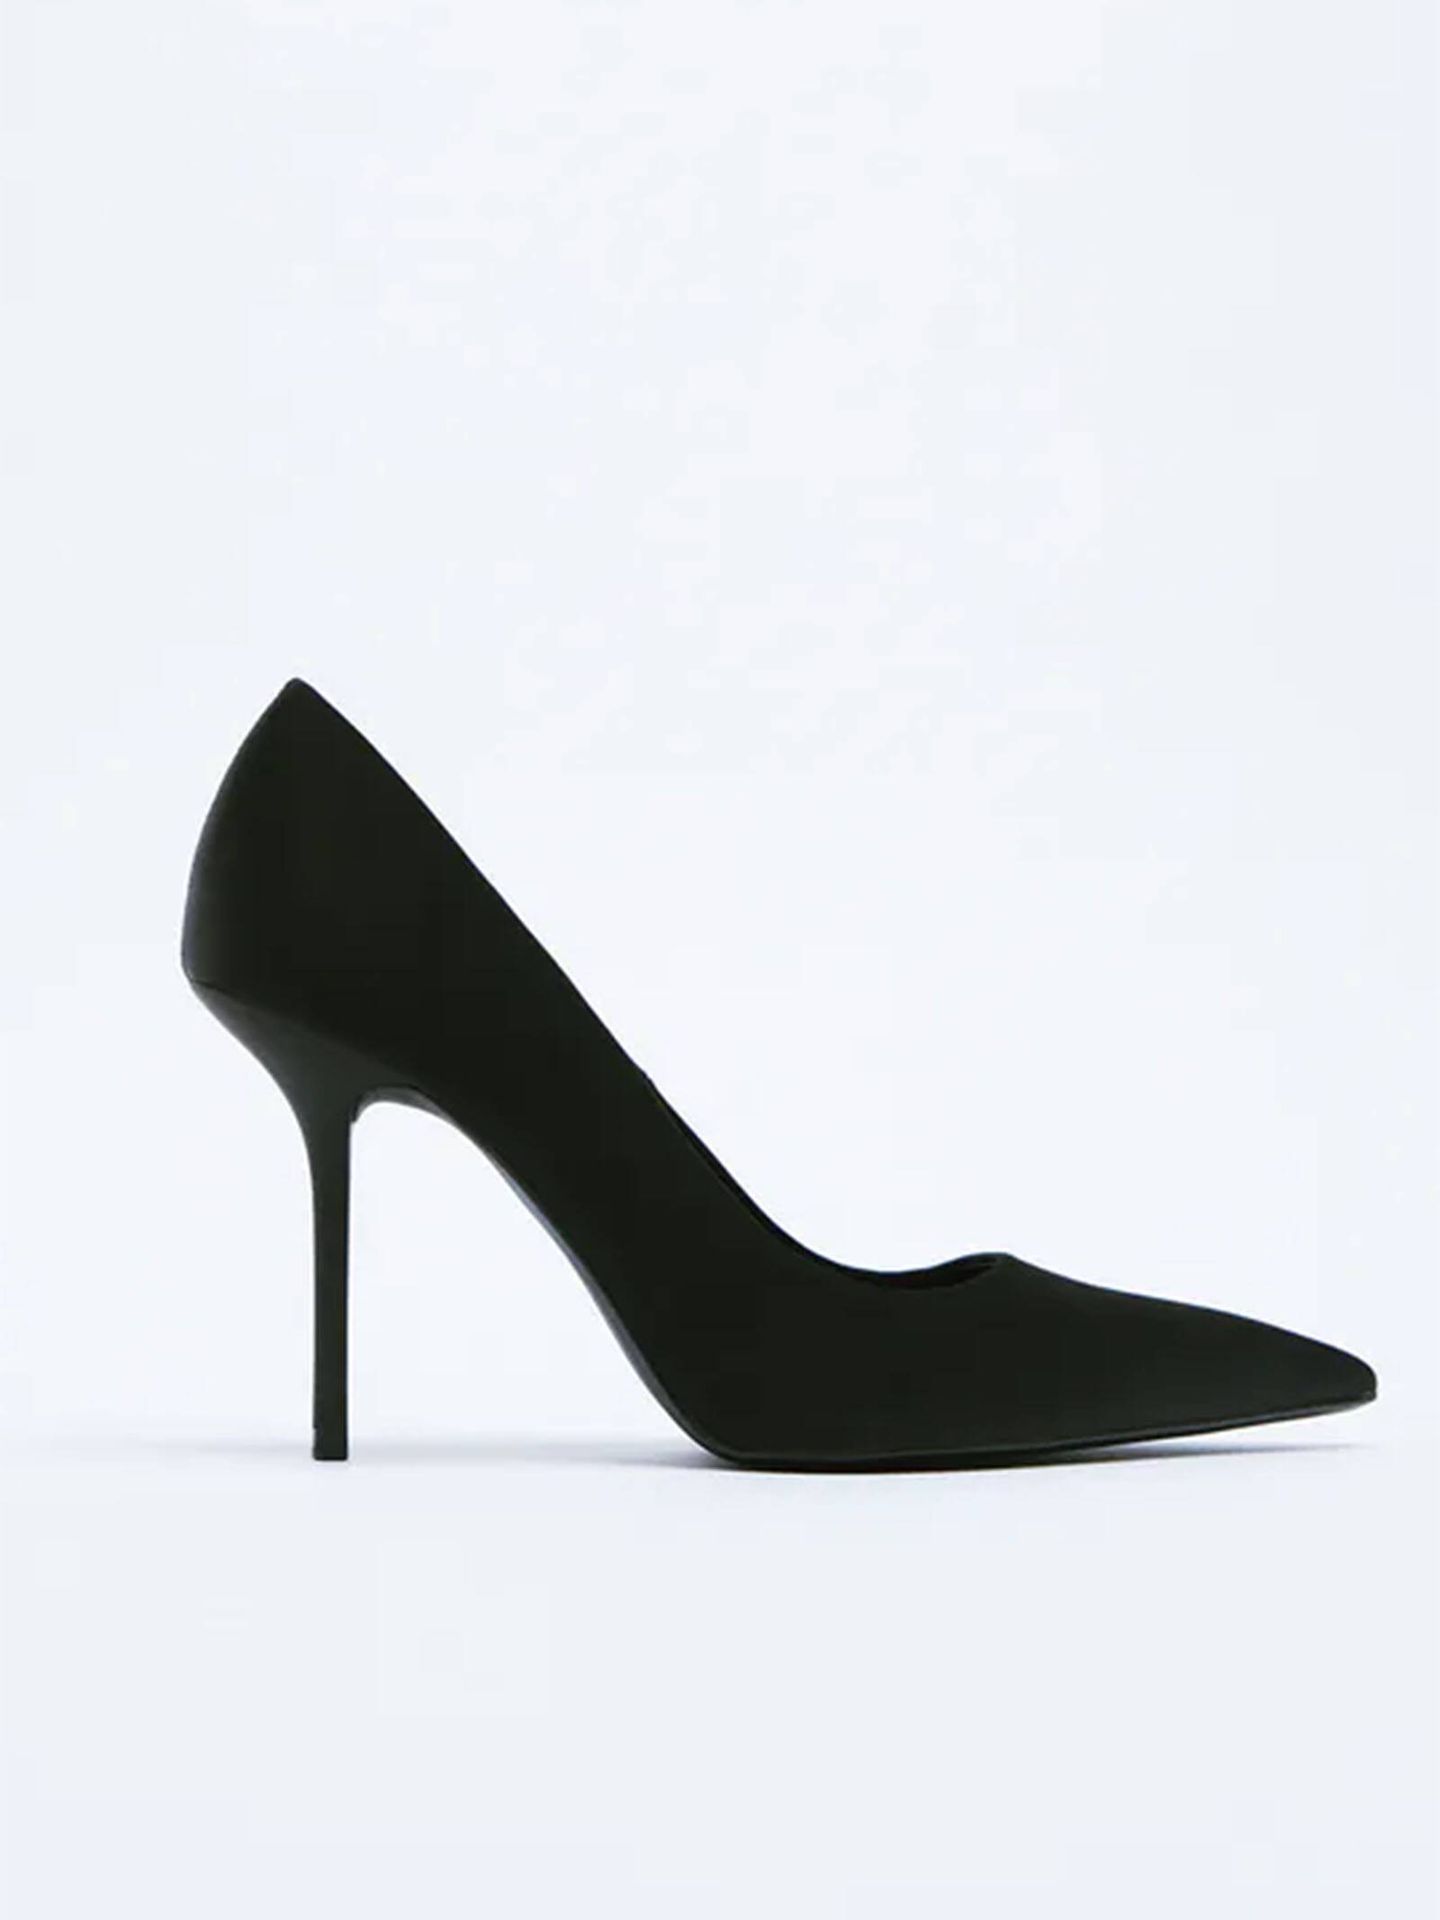 Zapato salón básico negro de Zara. (Cortesía)